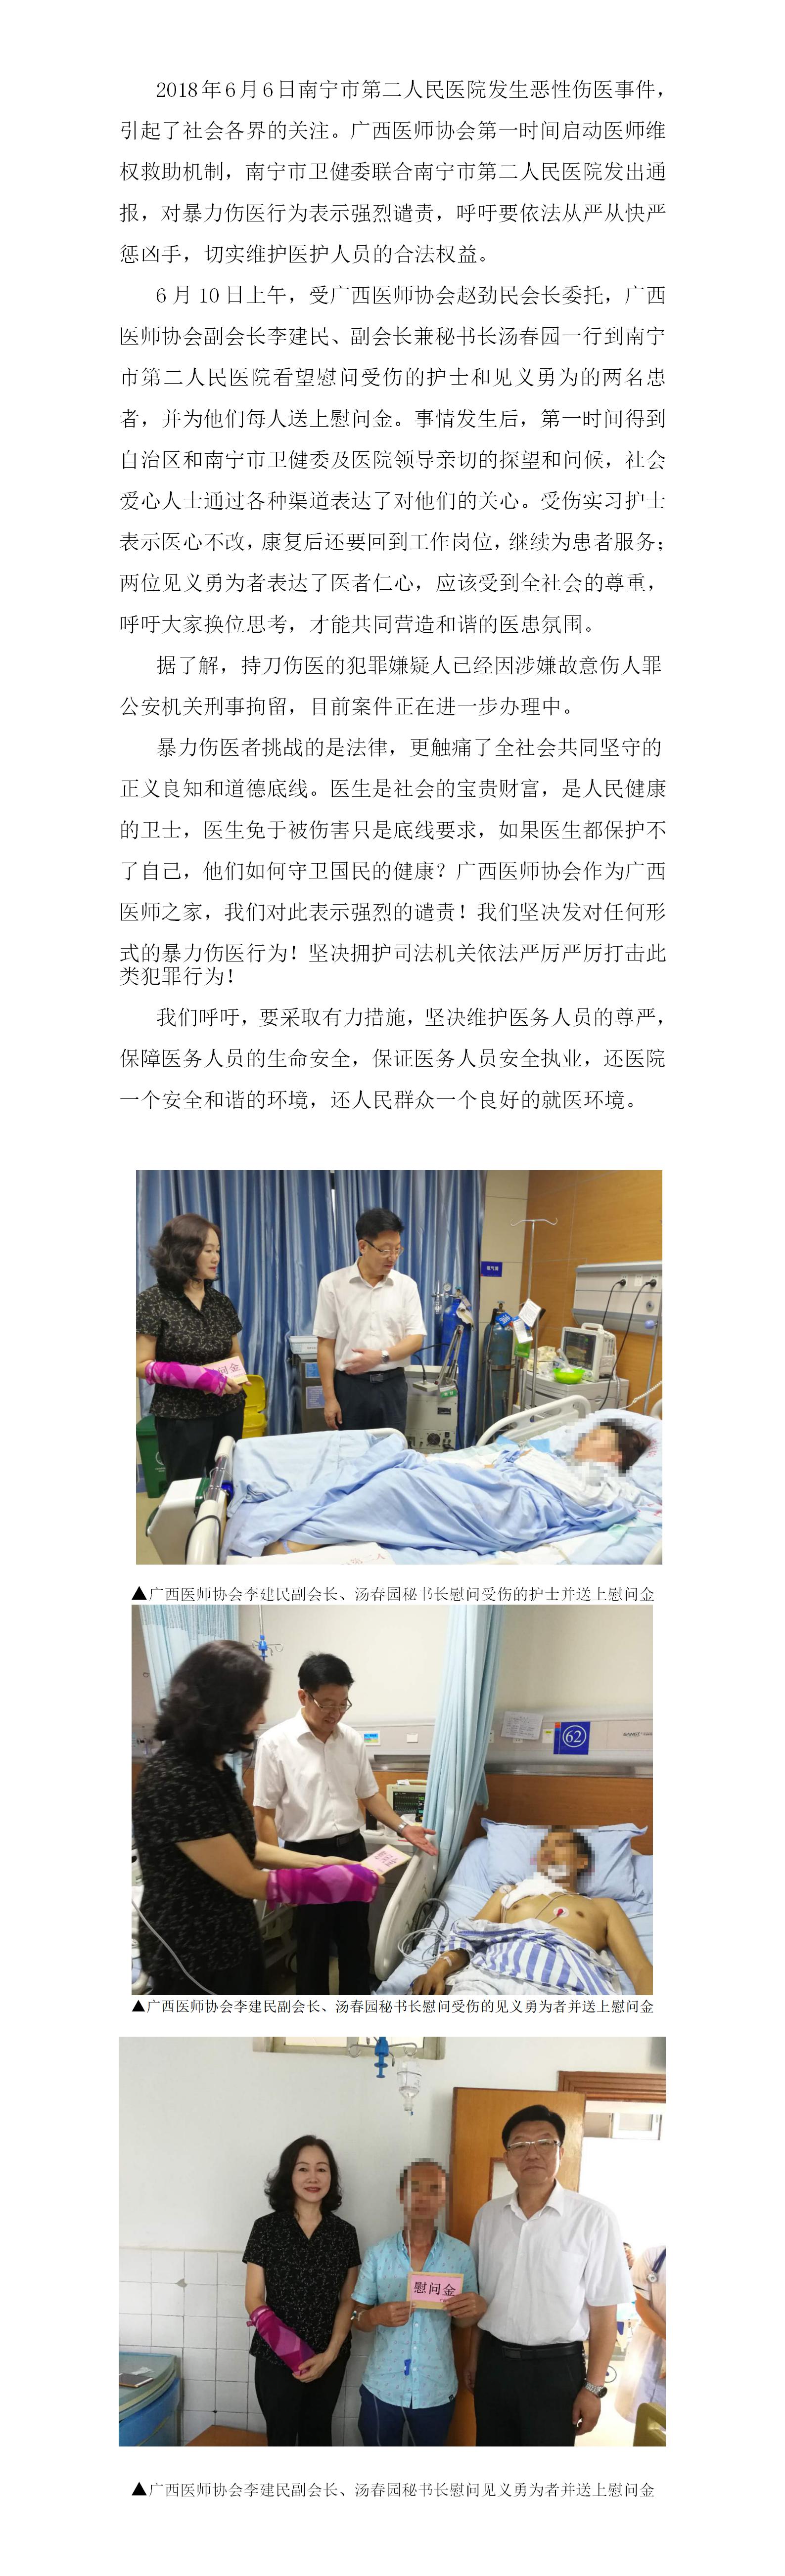 600cc全讯白菜慰问南宁市第二人民医院6.6事件伤者(1).jpg